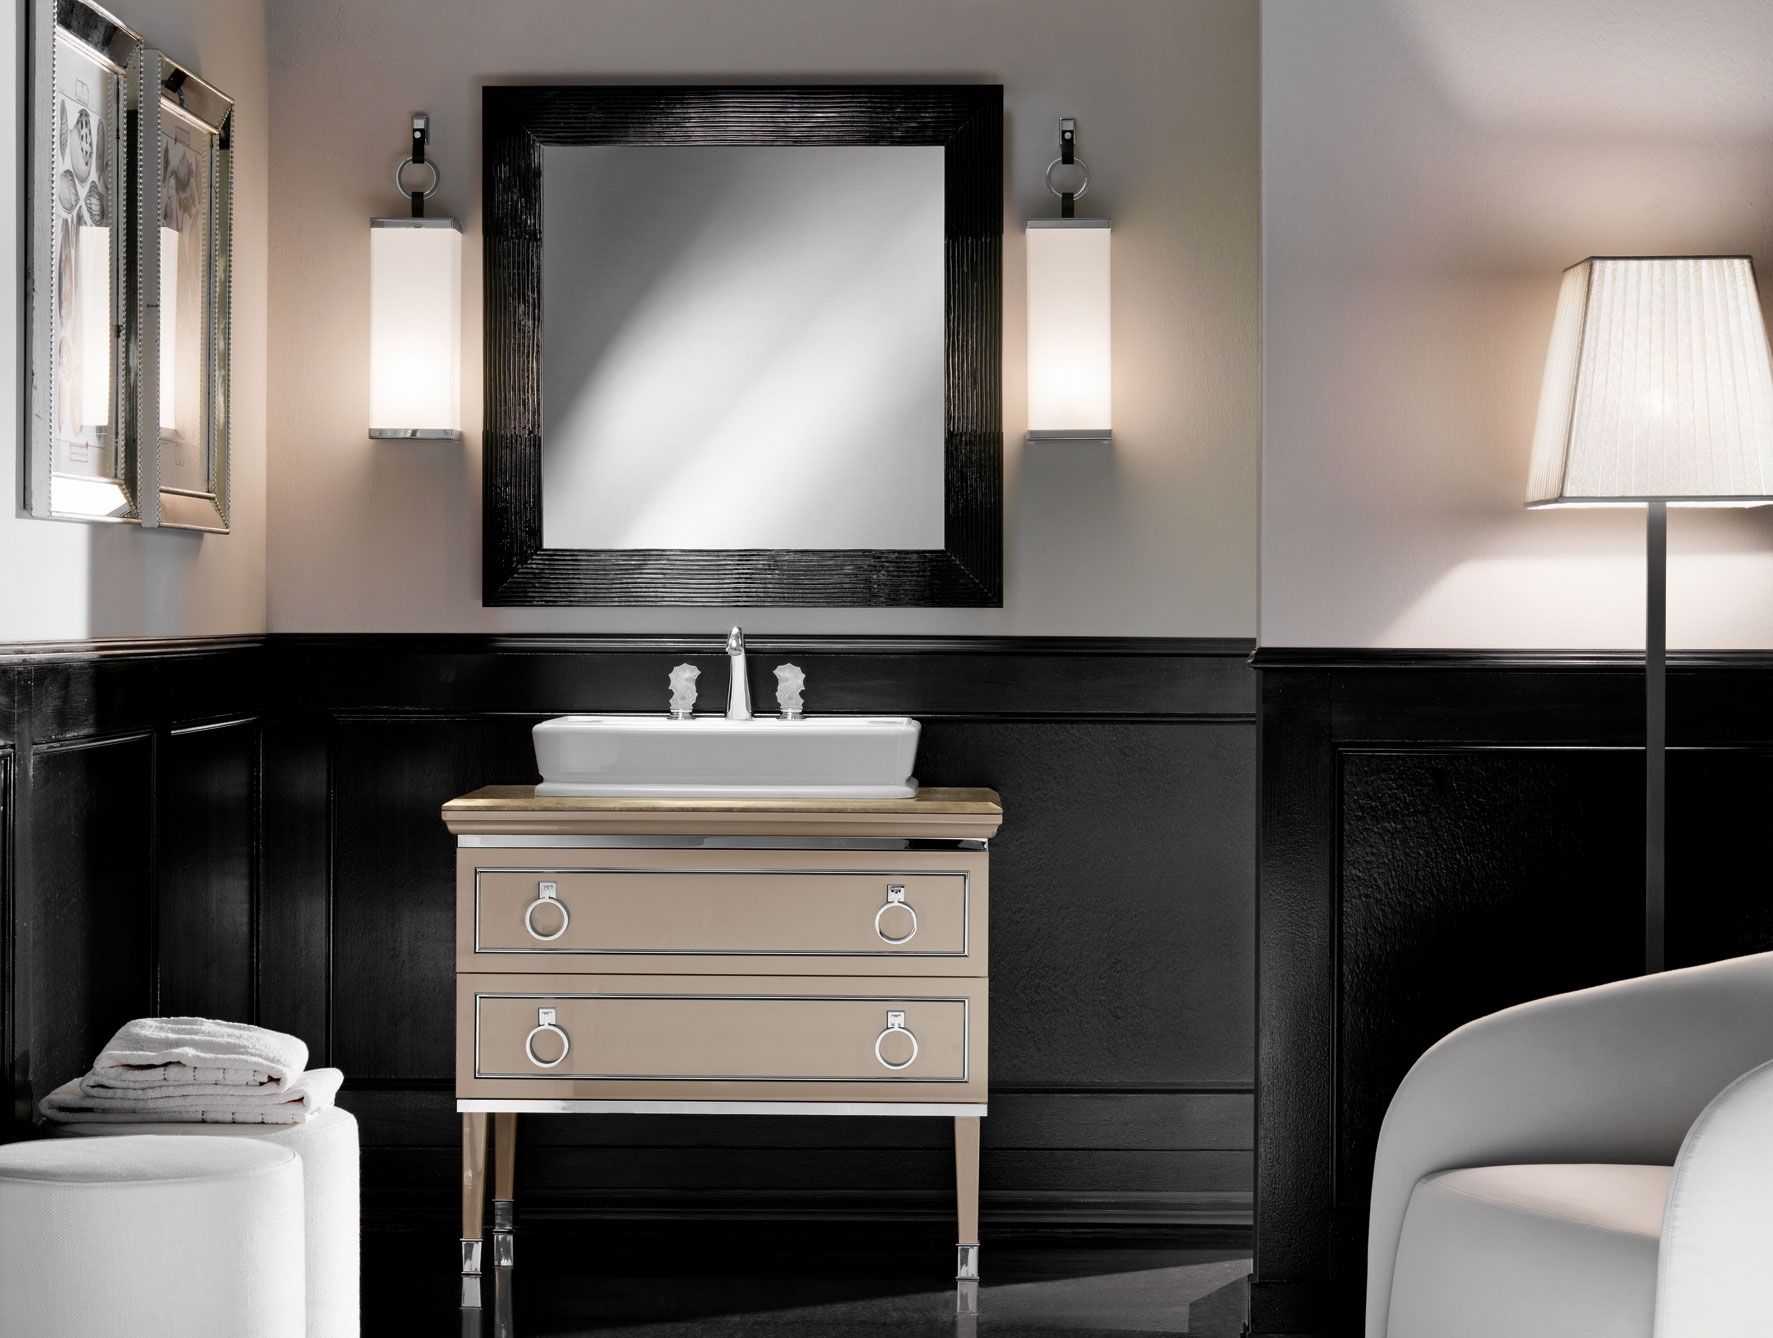 1 Mln Bathroom Tile Ideas Furnishings Pinterest Art Deco Inside Art Deco Style Bathroom Mirrors (View 6 of 15)